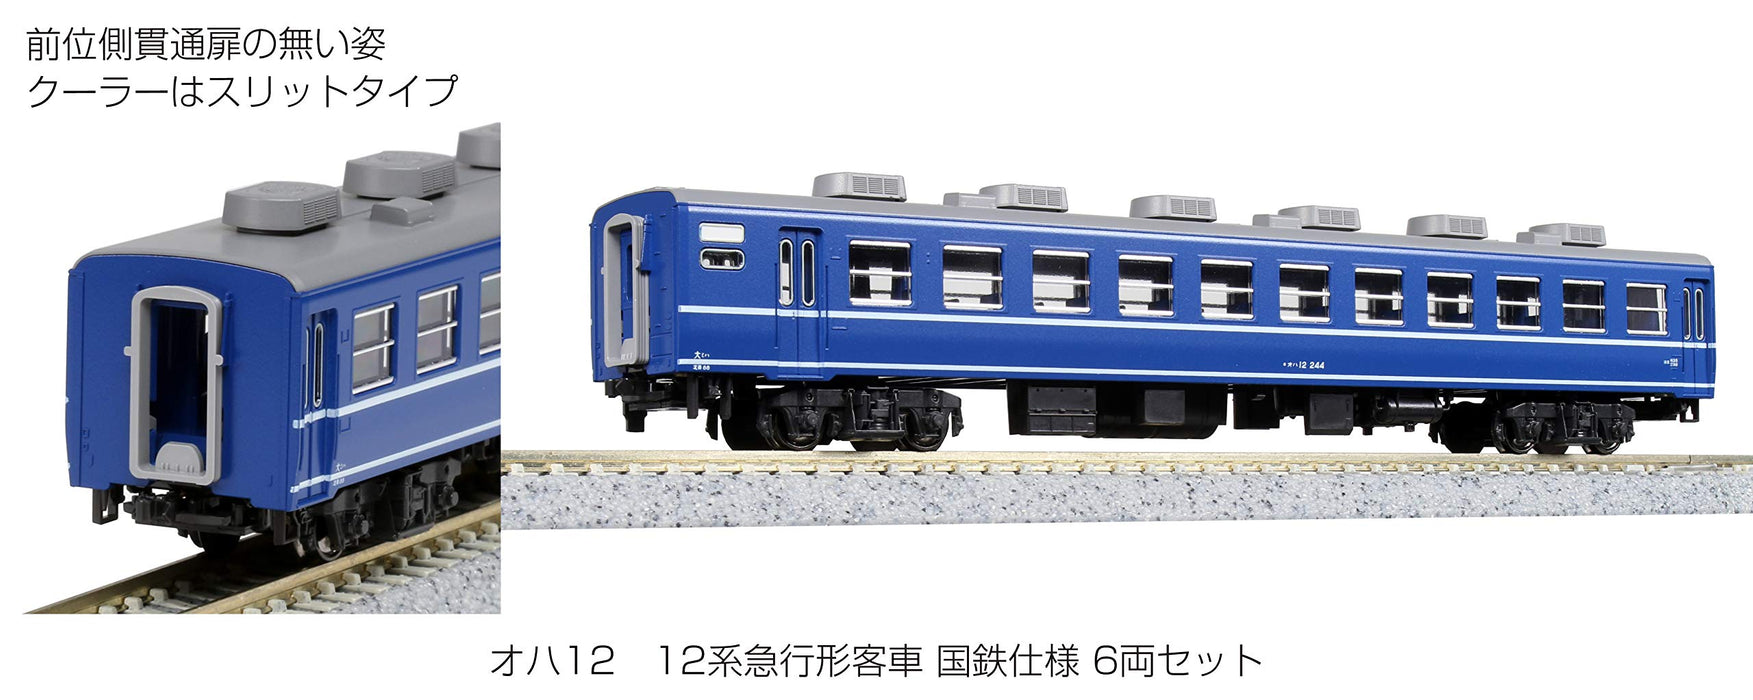 Kato N Gauge 12 Series 6-Car Express Passenger Train Set JNR Specification Railway Model 10-1550